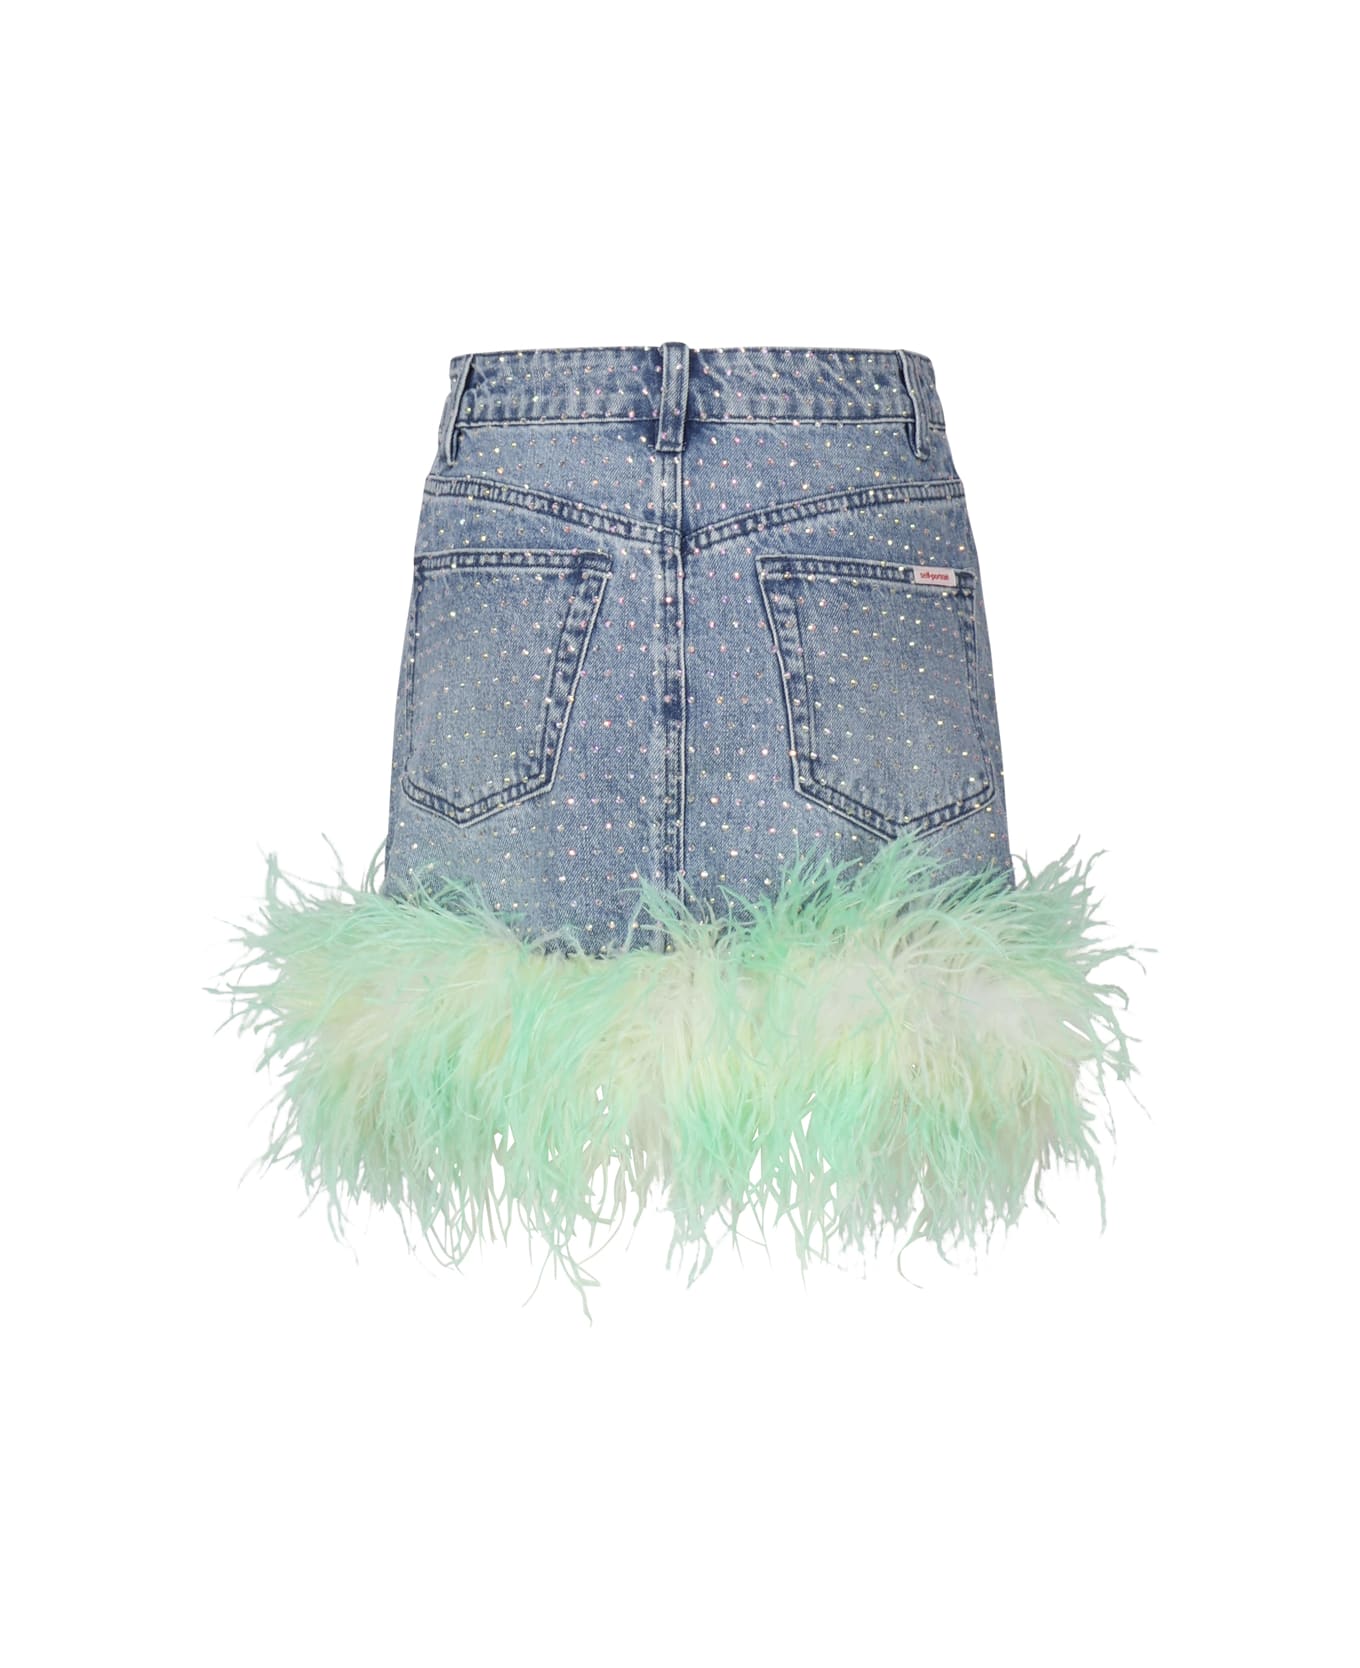 self-portrait Denim Skirt With Rhinestone Feathers - Blue, green